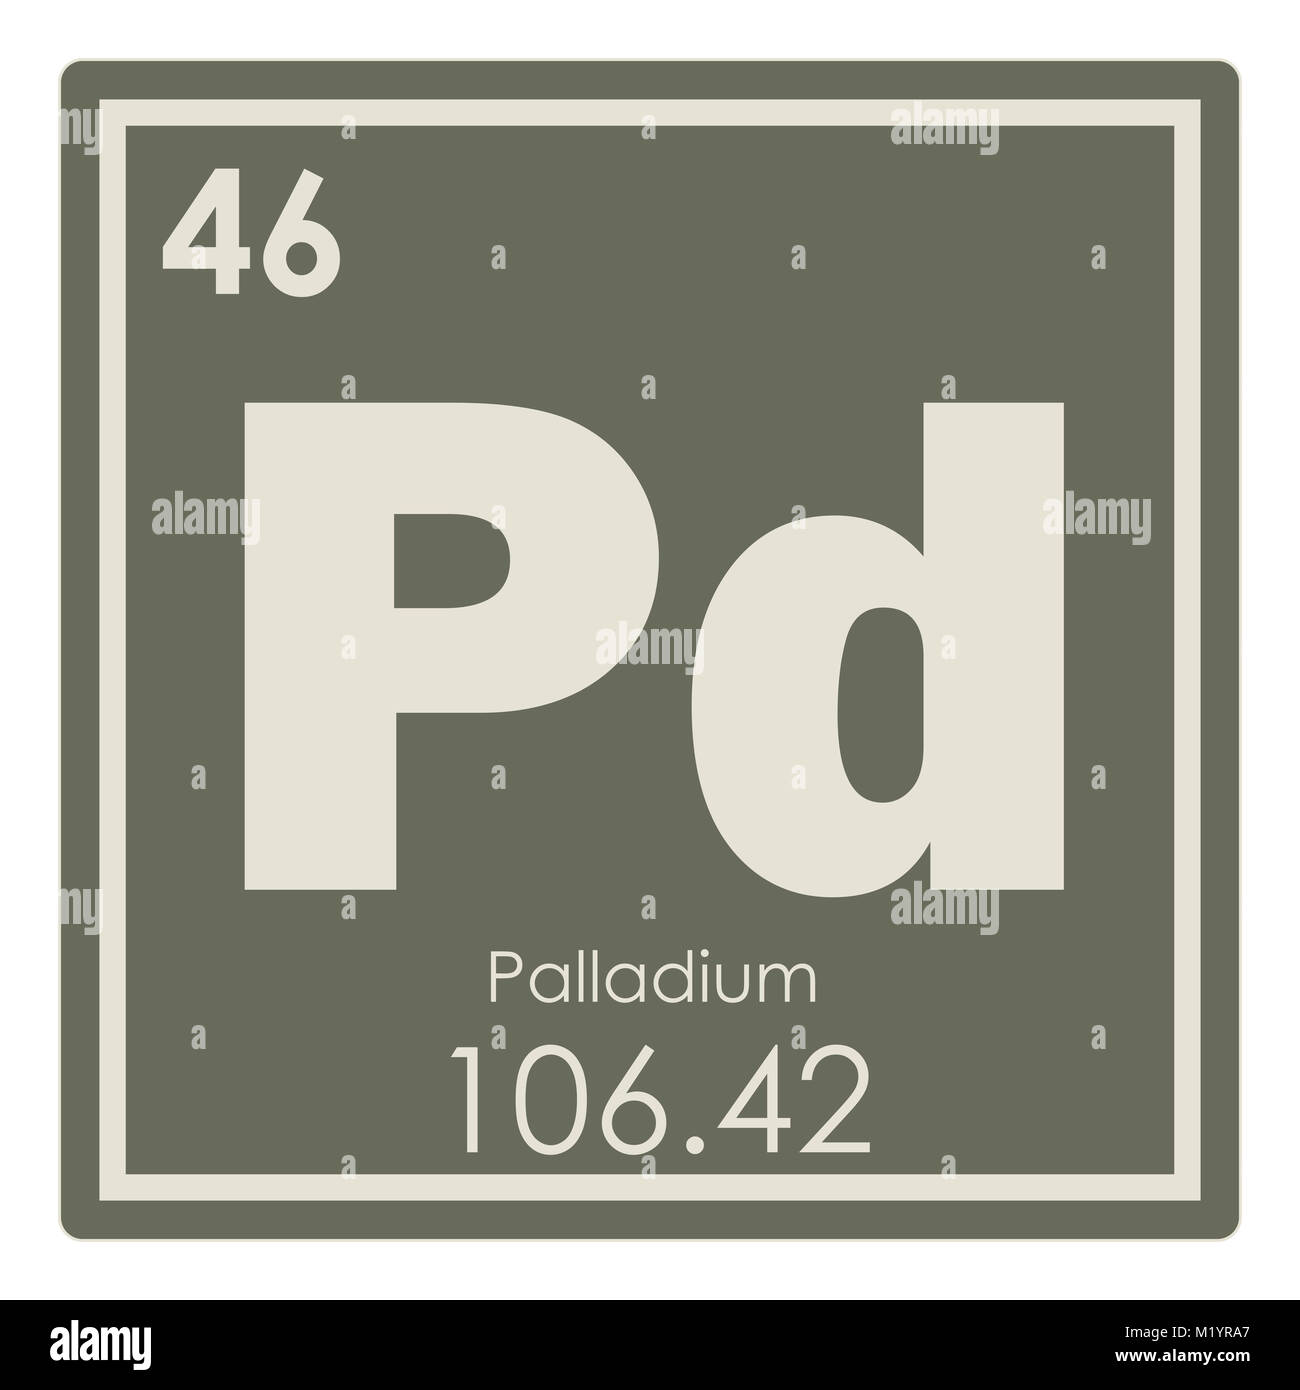 Palladium chemical element periodic table science symbol Stock Photo - Alamy